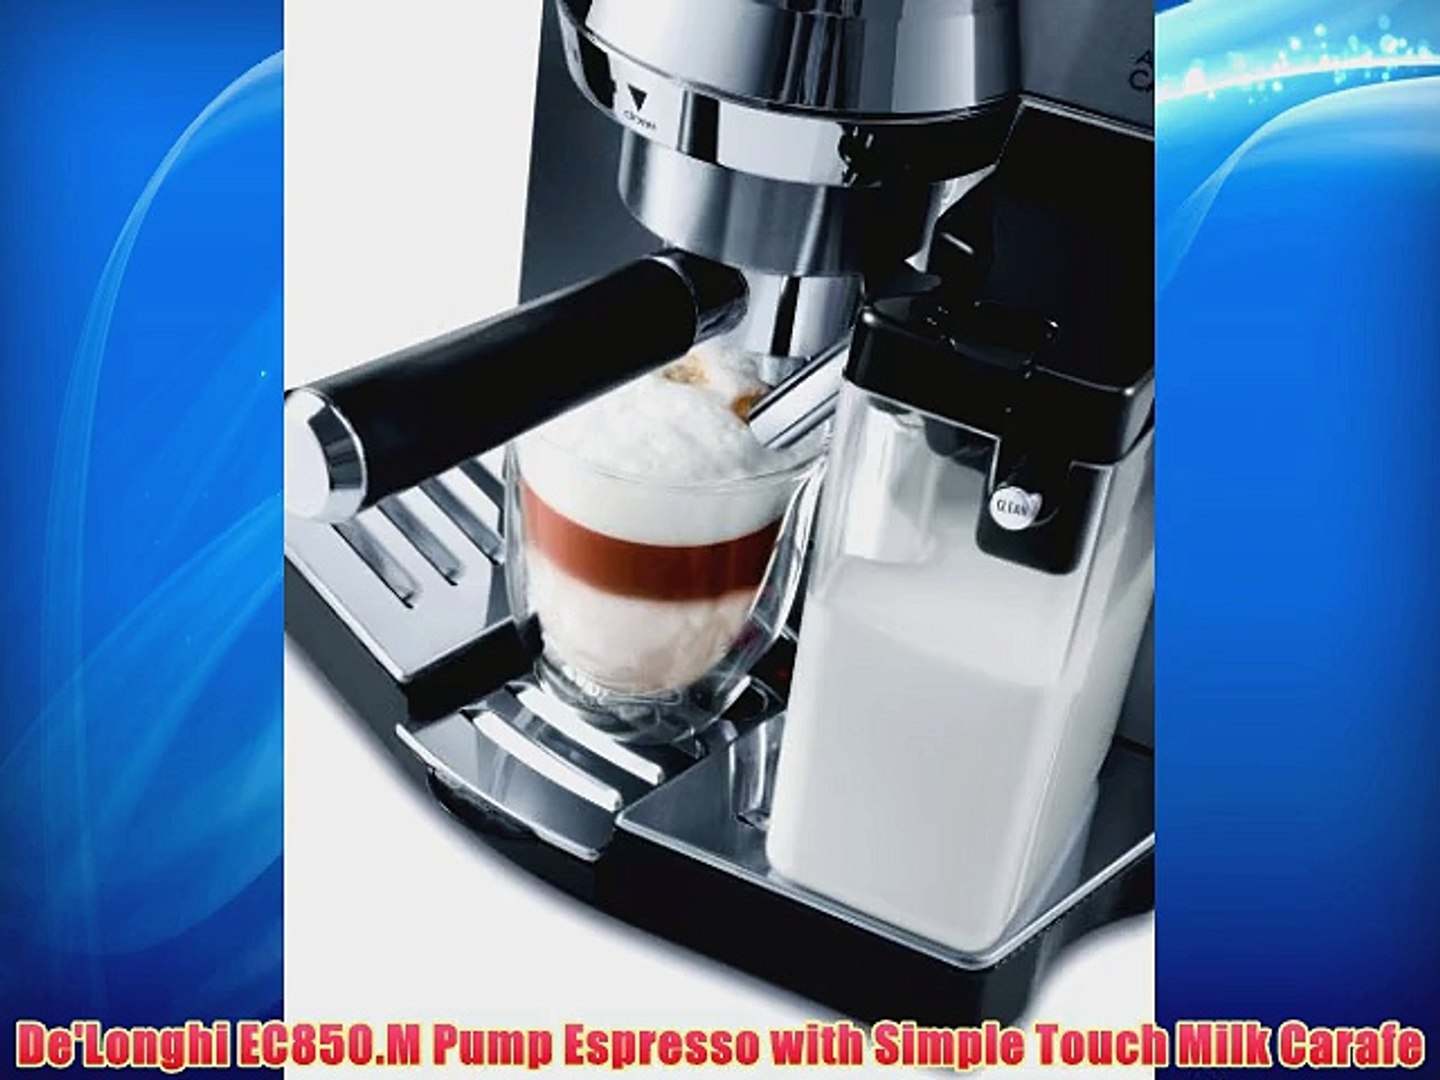 De'Longhi EC850.M Pump Espresso with Simple Touch Milk Carafe - video  Dailymotion